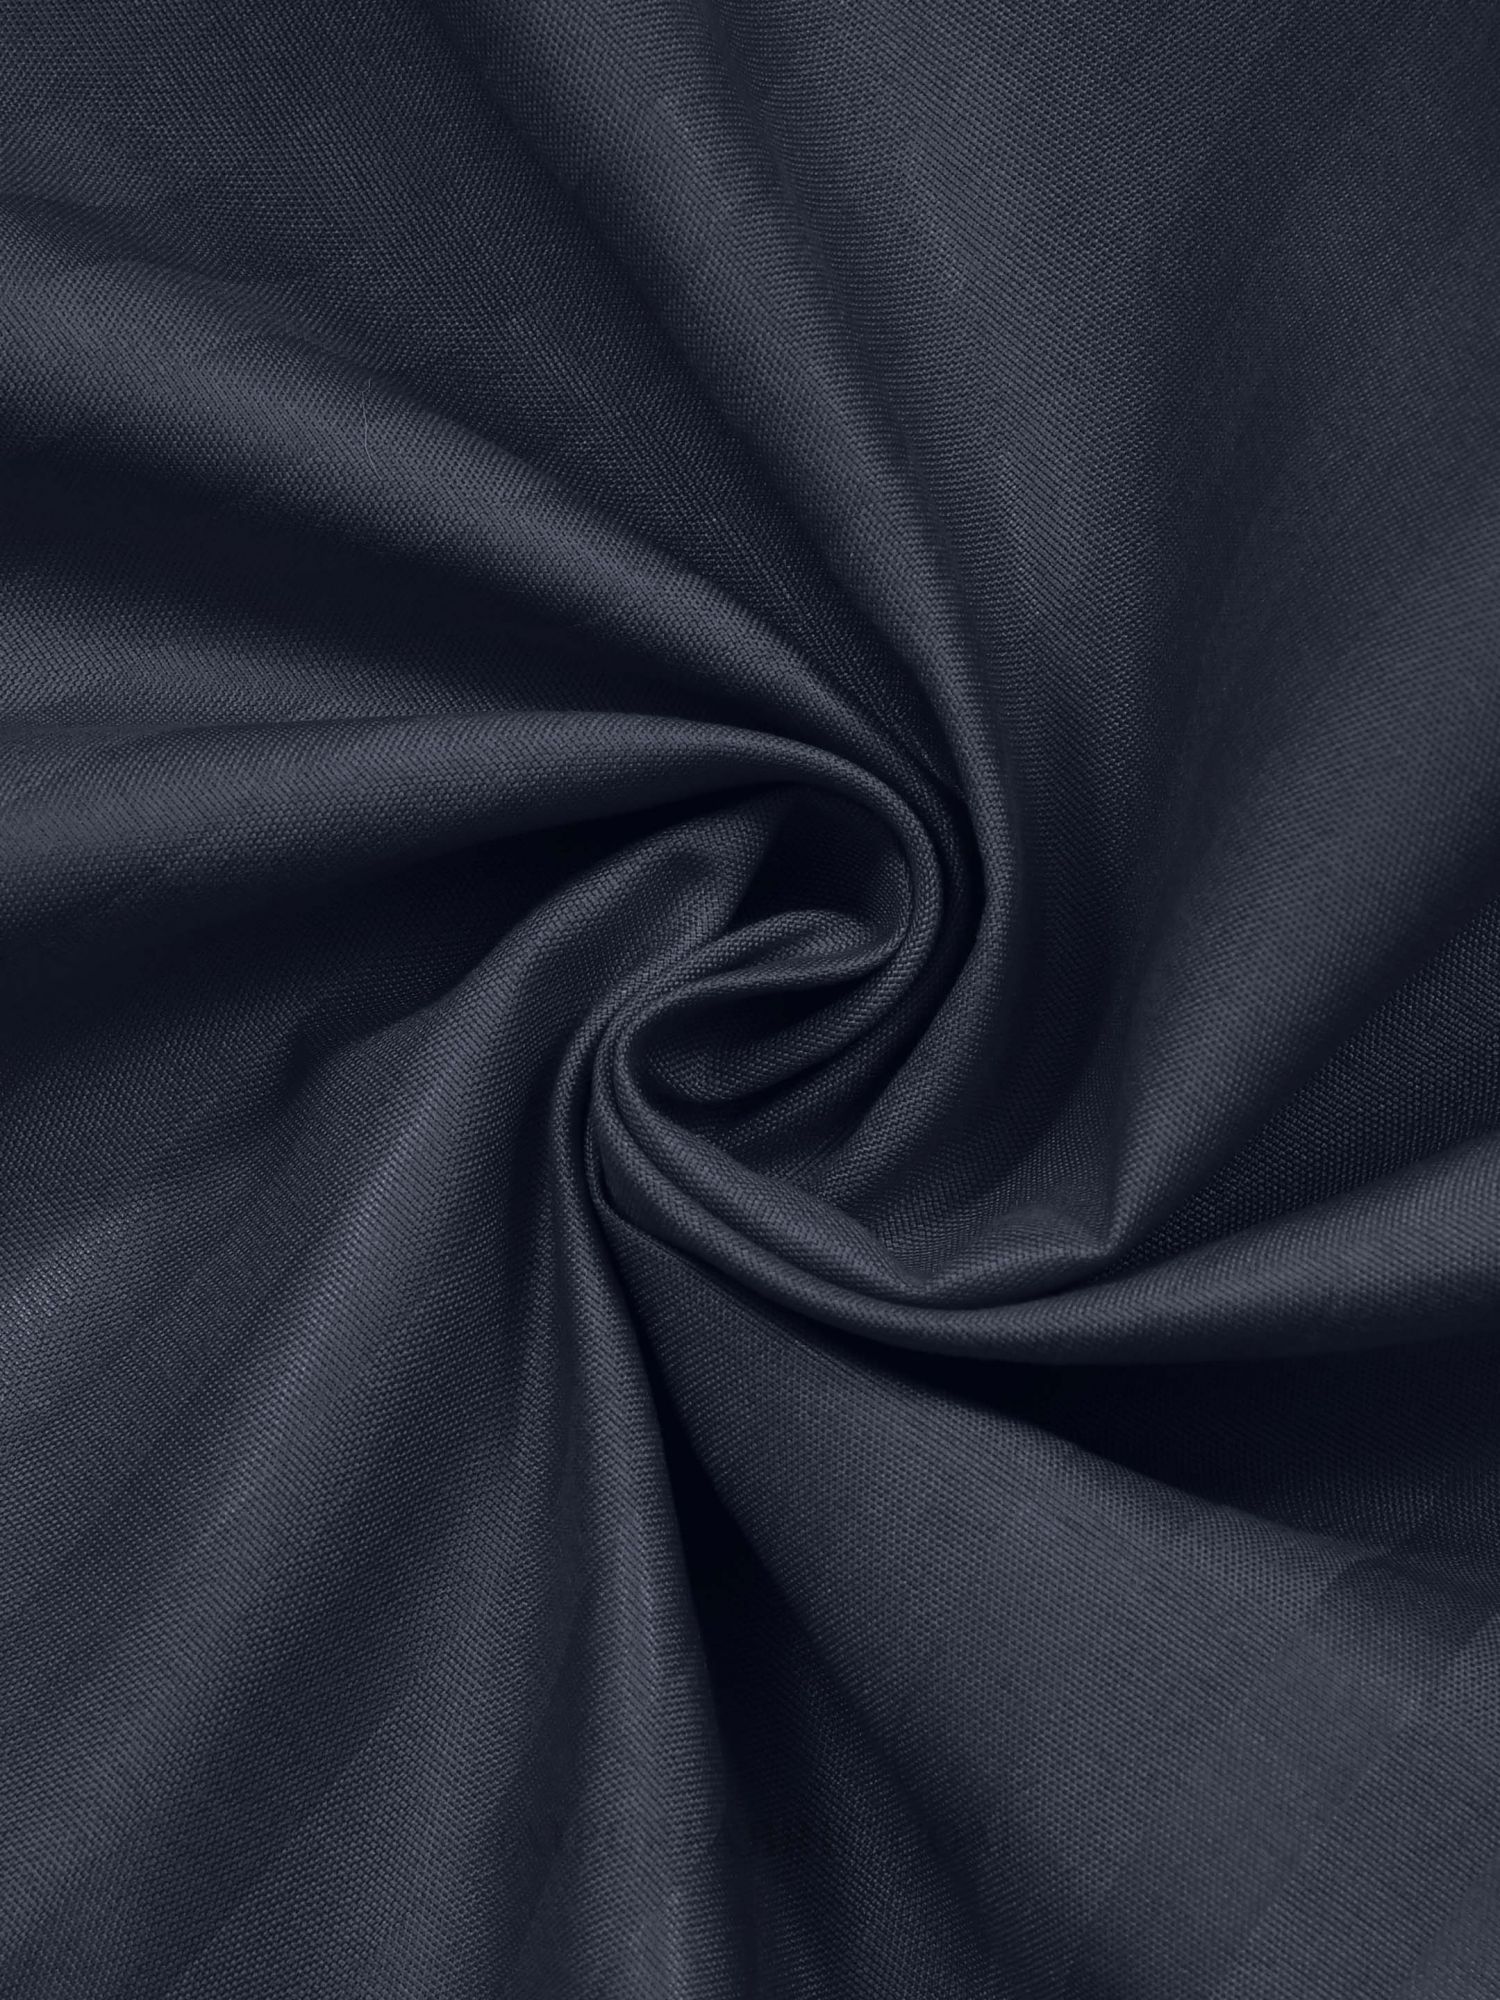 Charcoal Gray Satin Stripes Single BedSheet